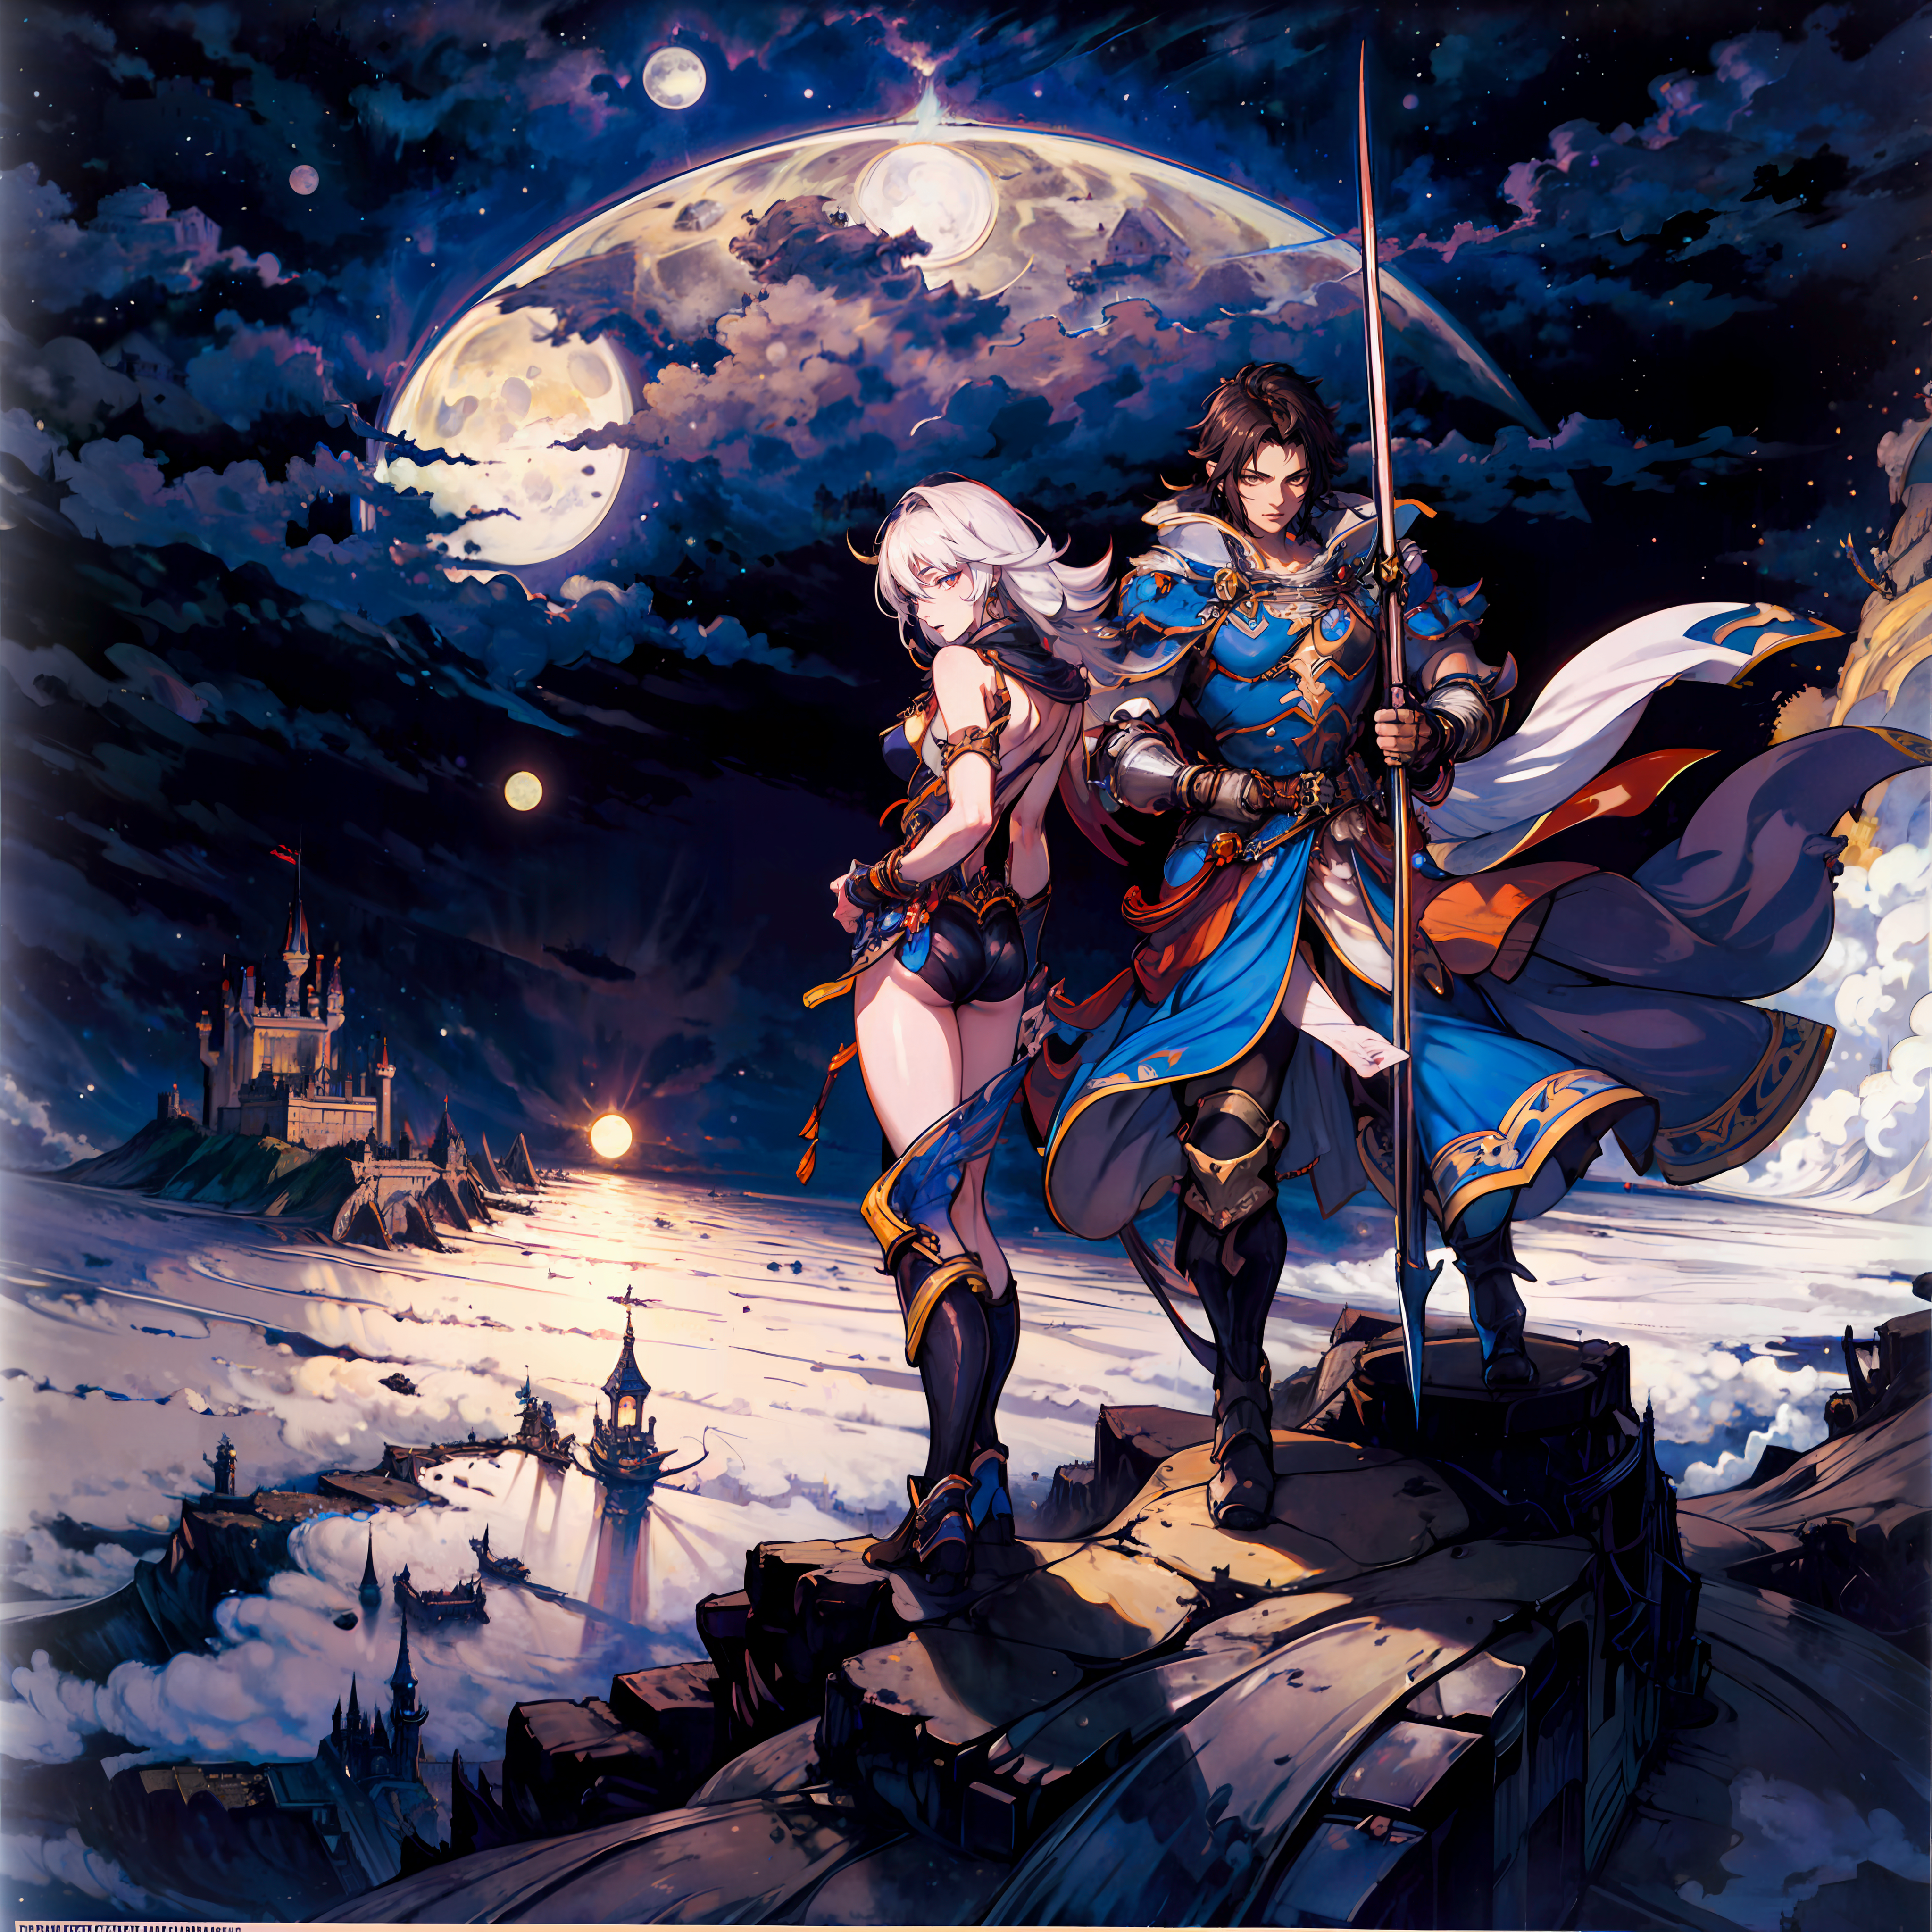 dragoon holding Lance, castle under moonlight, amano yoshitaka, <lora:amano_yoshitaka_offset:1>